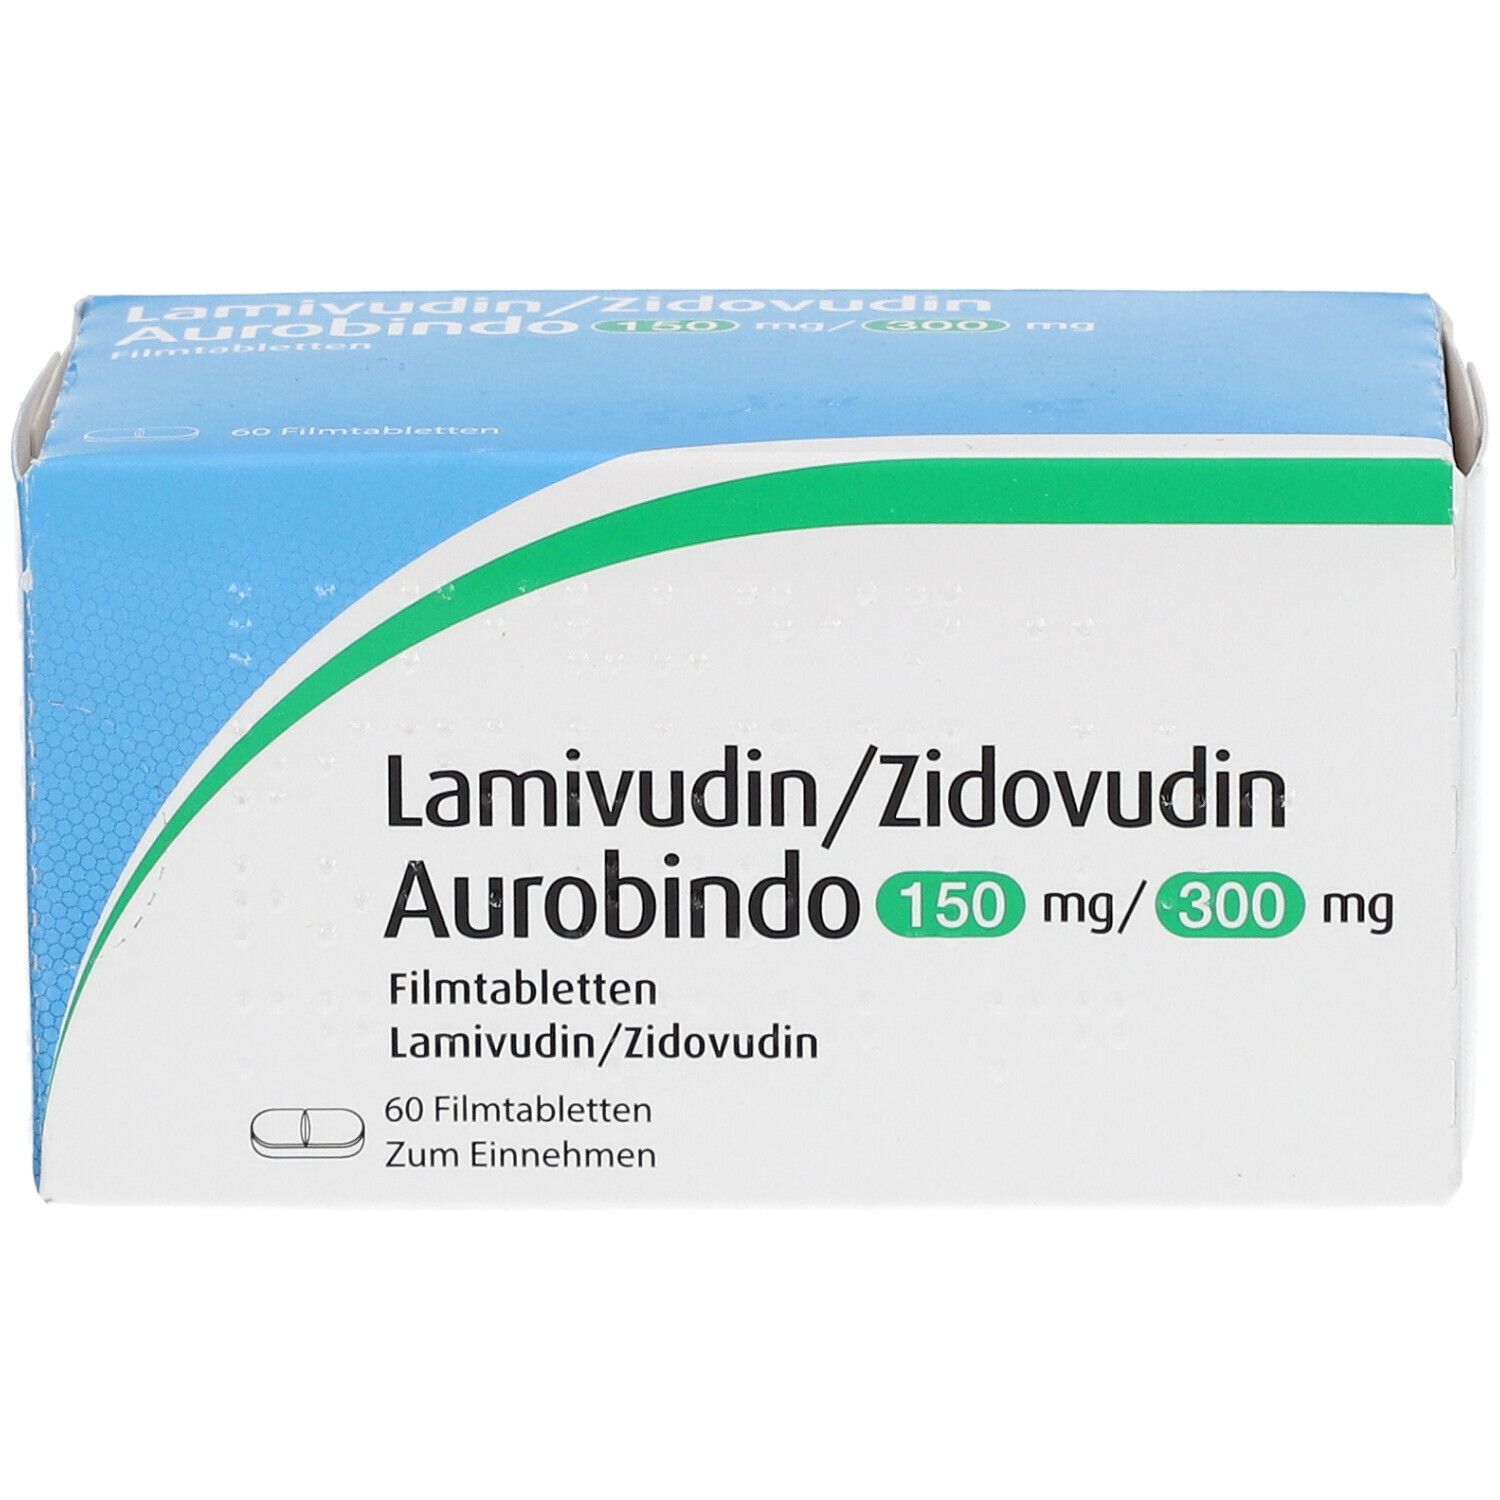 Lamivudin/Zidovudin Aurobindo 150 mg/300 mg